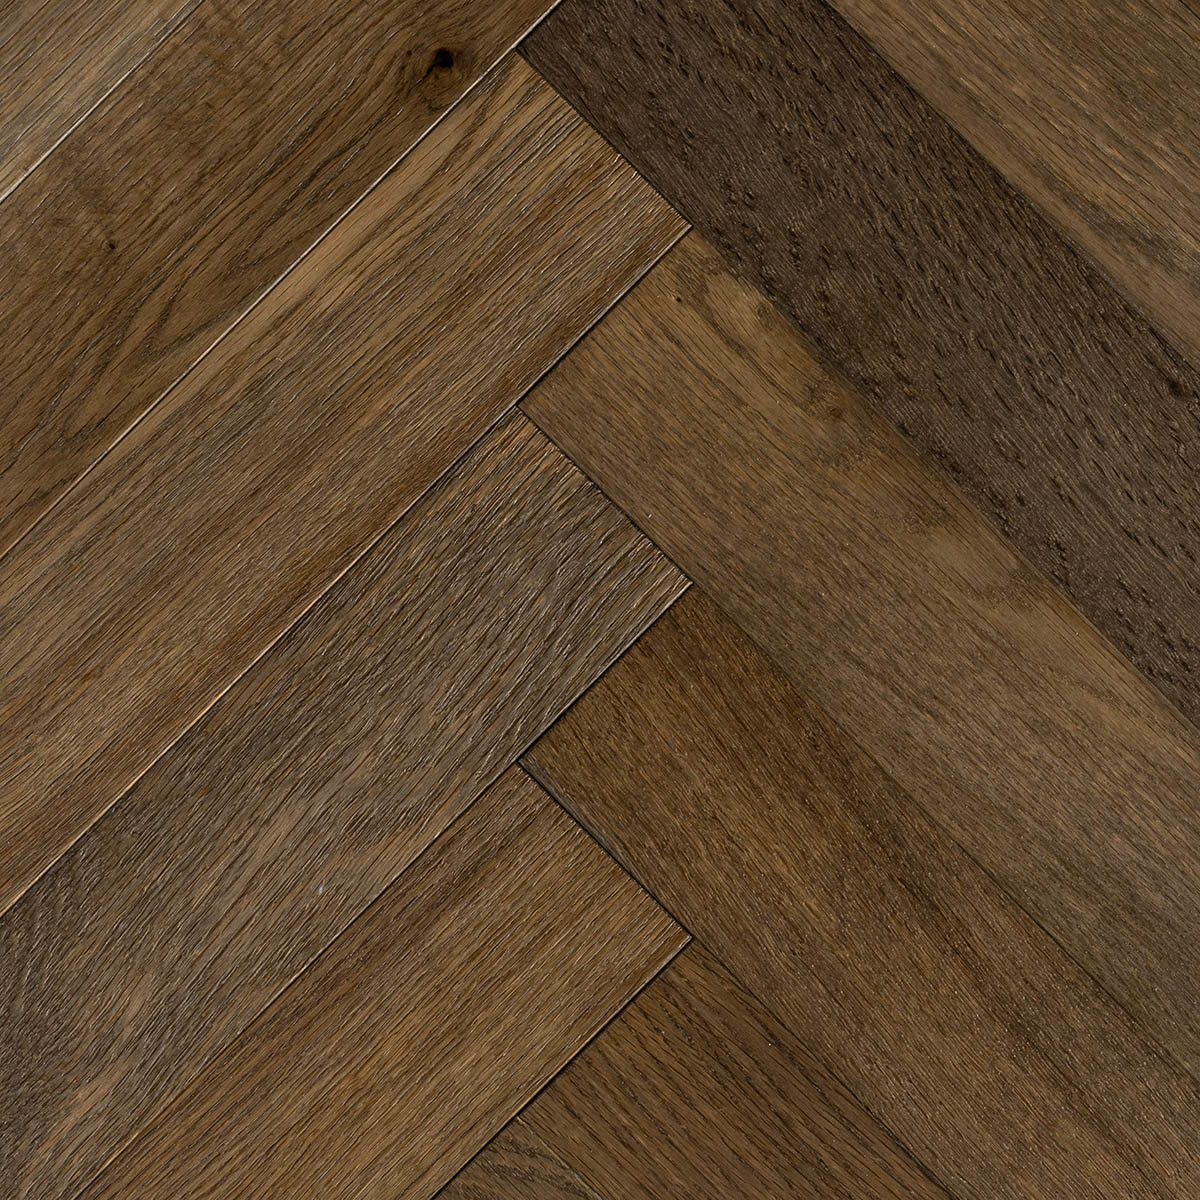 Smithpool Road - Rustic-Grade Oak Herringbone Floor 280mm x 70mm